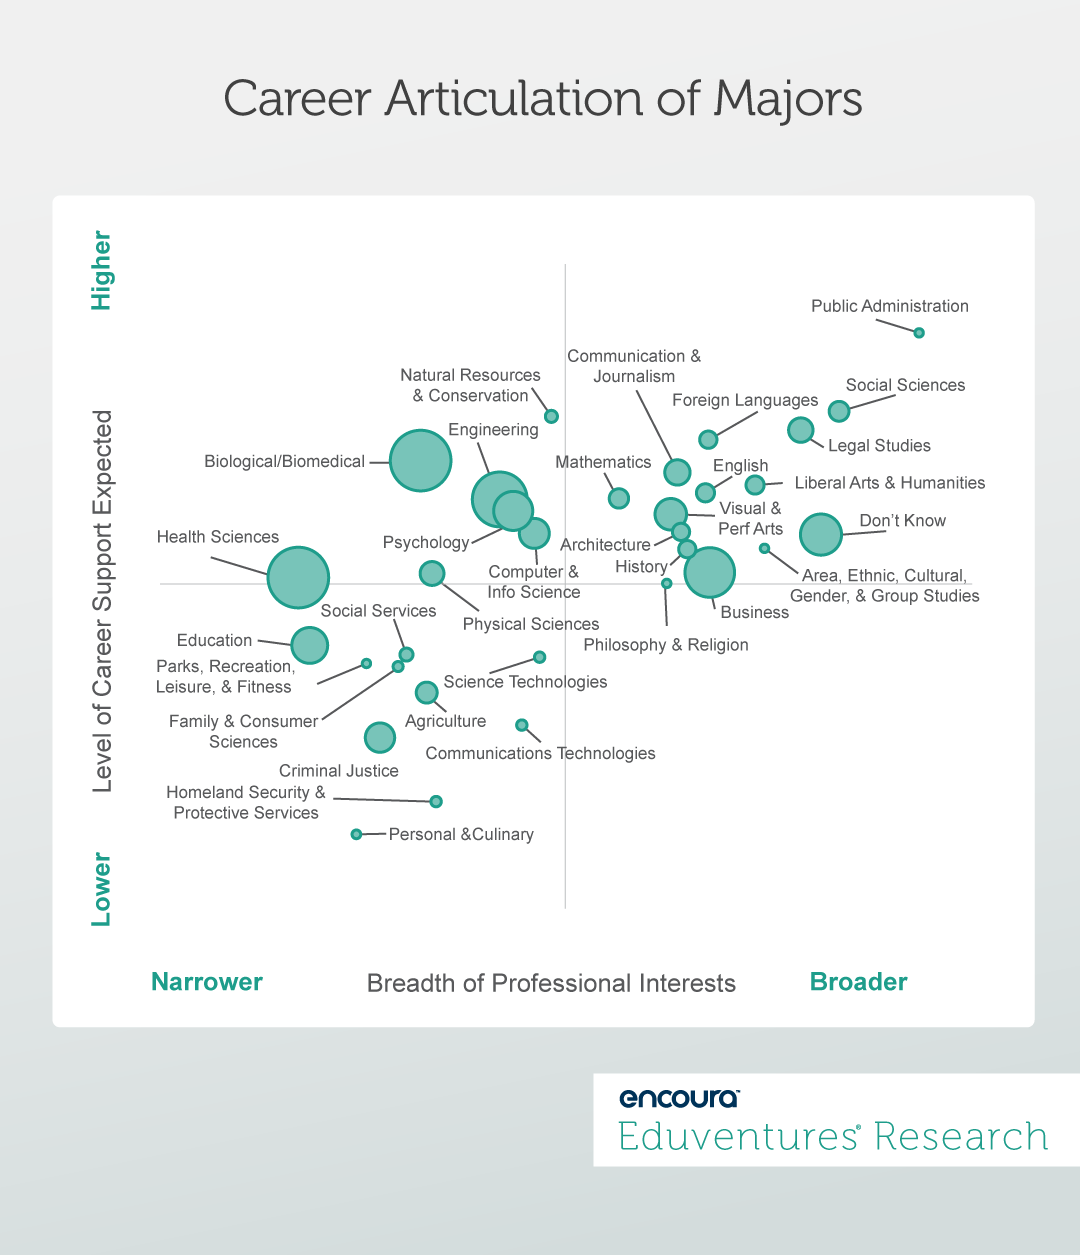 Career Articulation of Majors